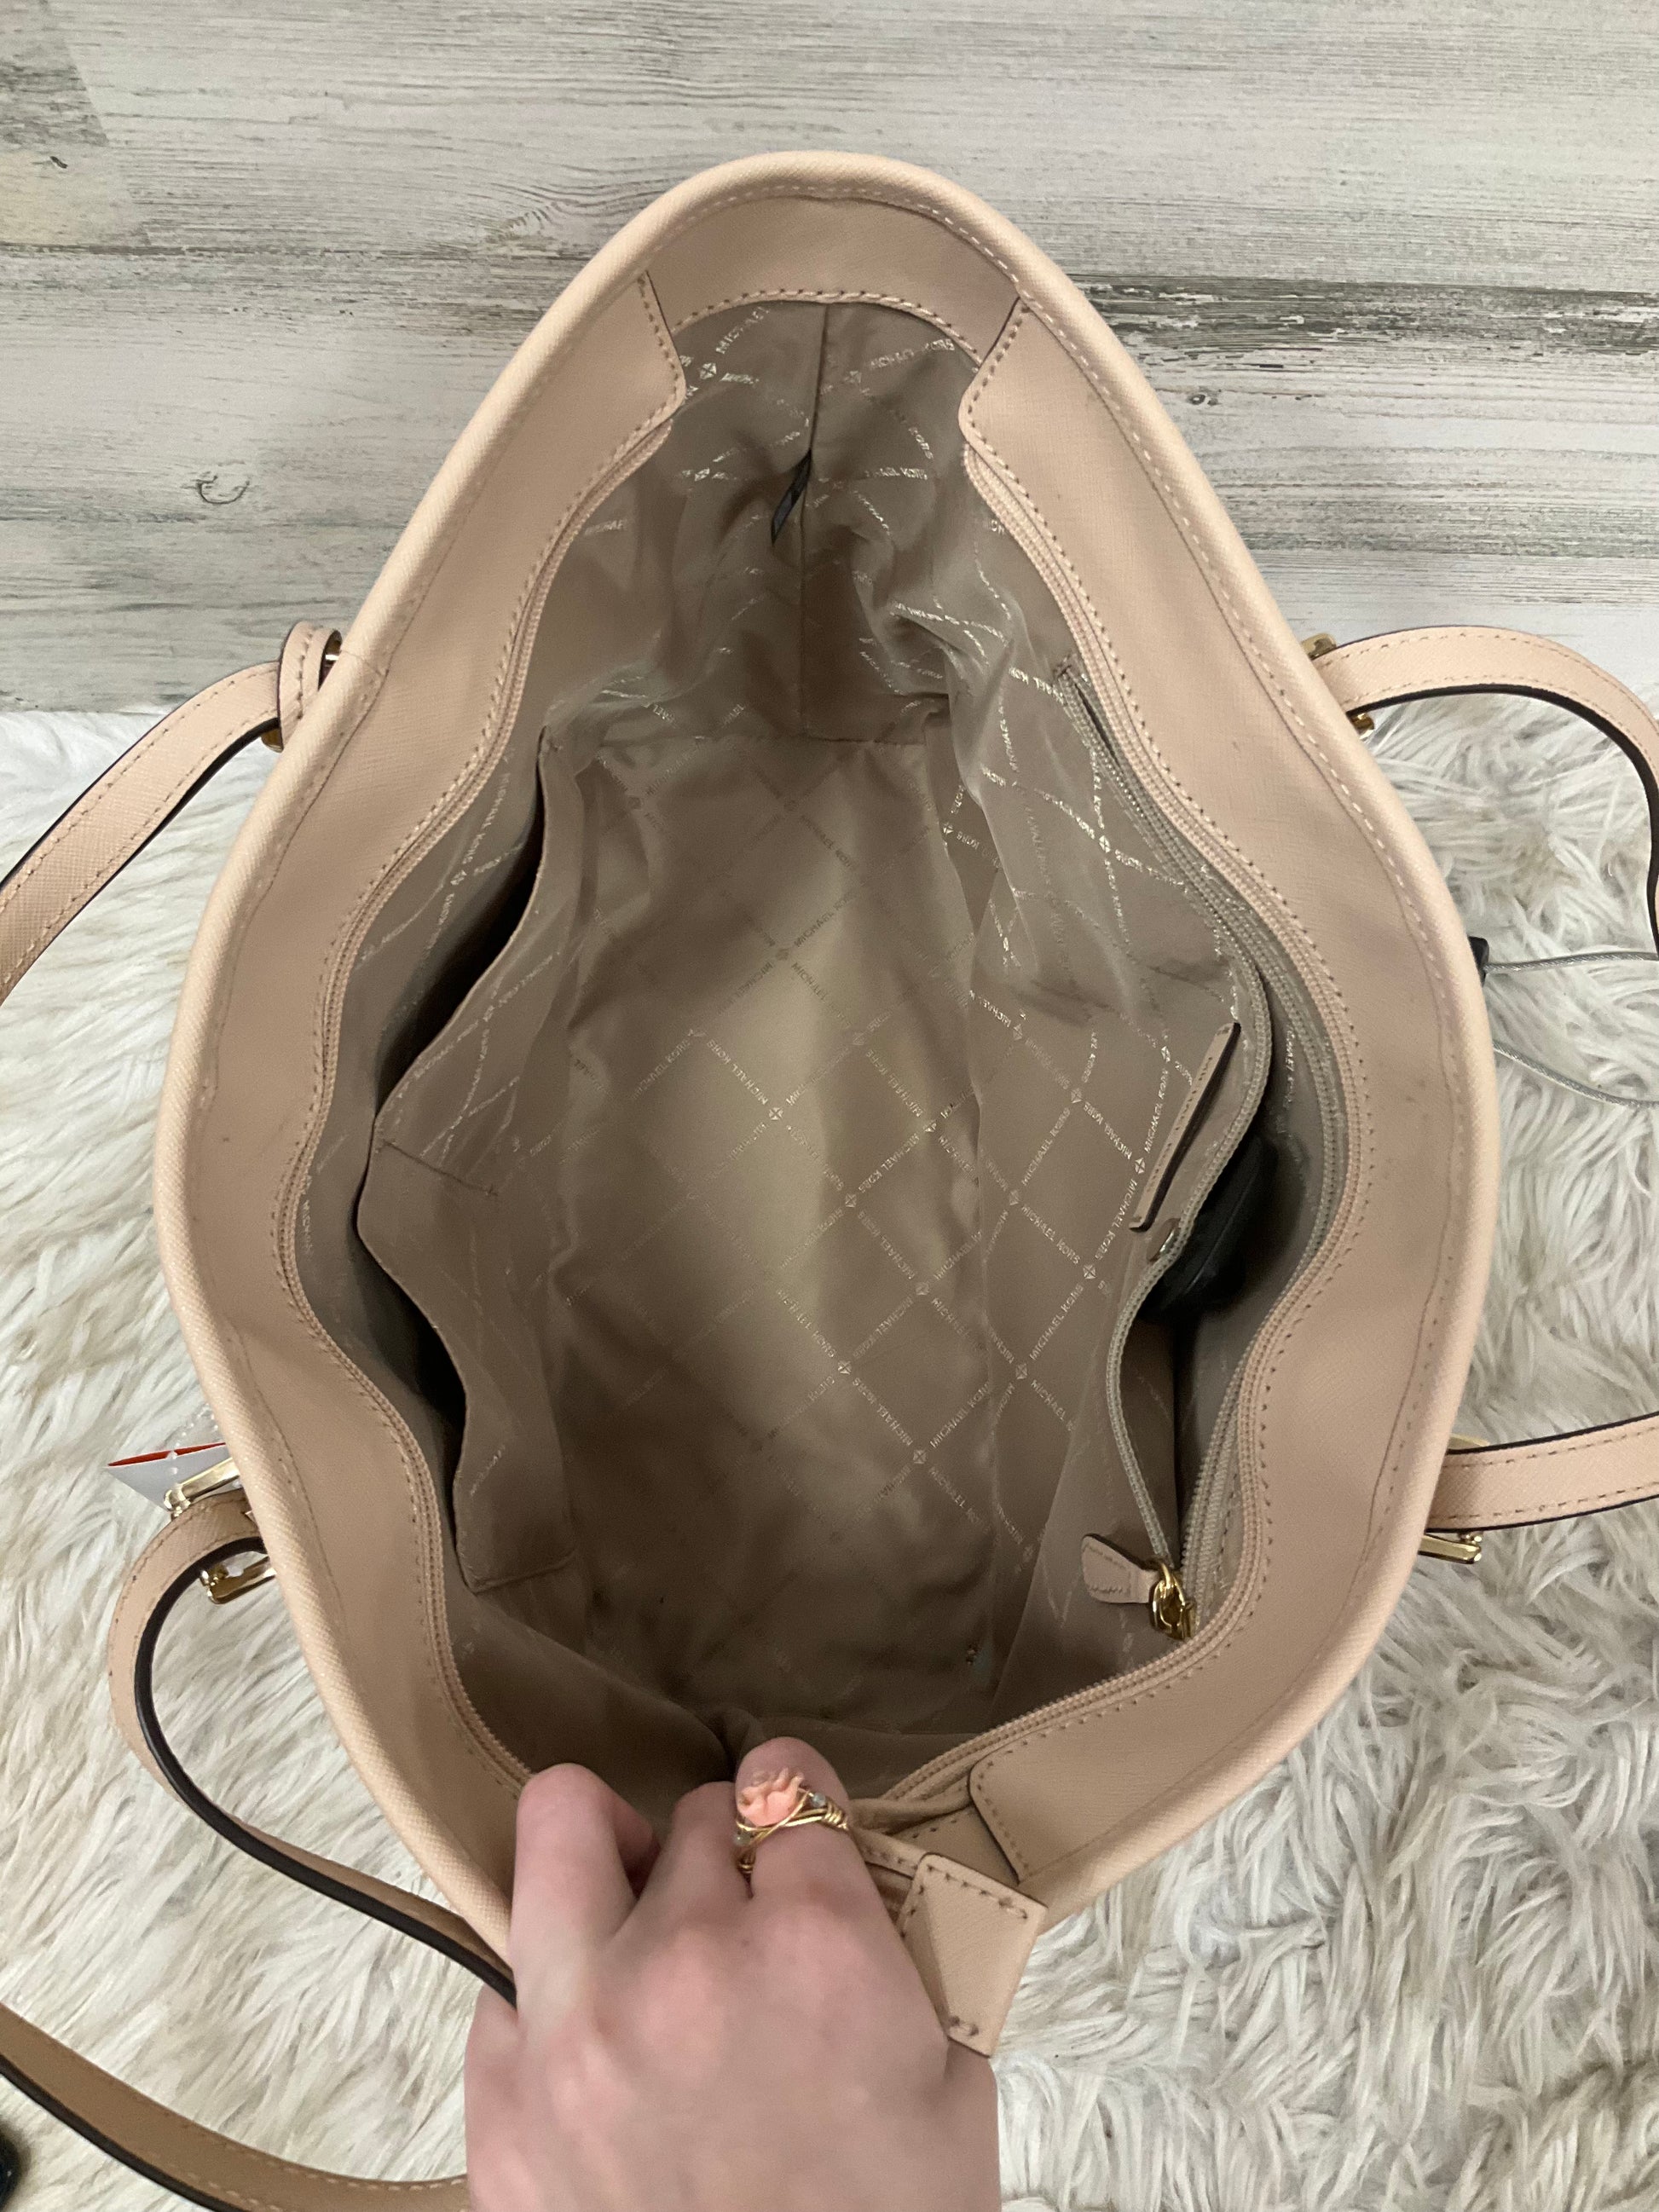 Michael Kors - Michael Kors Tote Bag on Designer Wardrobe